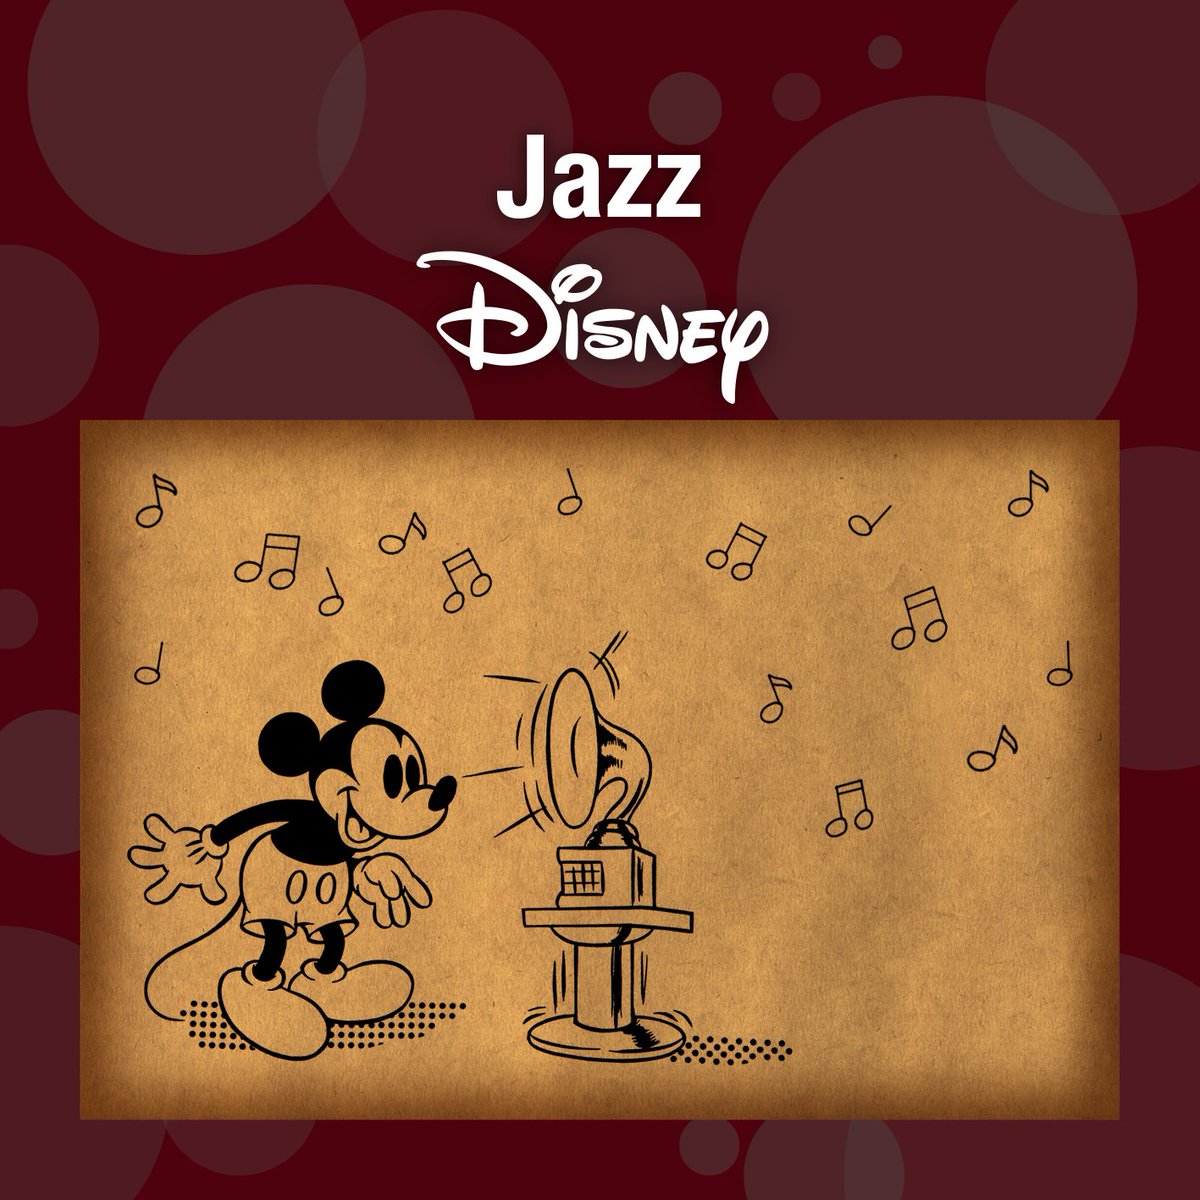 Spotify Japan ٹوئٹر پر ディズニー公式アカウント Disneymusicjp から新しいプレイリスト Jazz Disney が公開 最新アルバム Jazz Loves Disney 2 の楽曲など様々なジャズ ミュージシャンに愛されカバーされた ディズニー音楽をフォローしてチェック